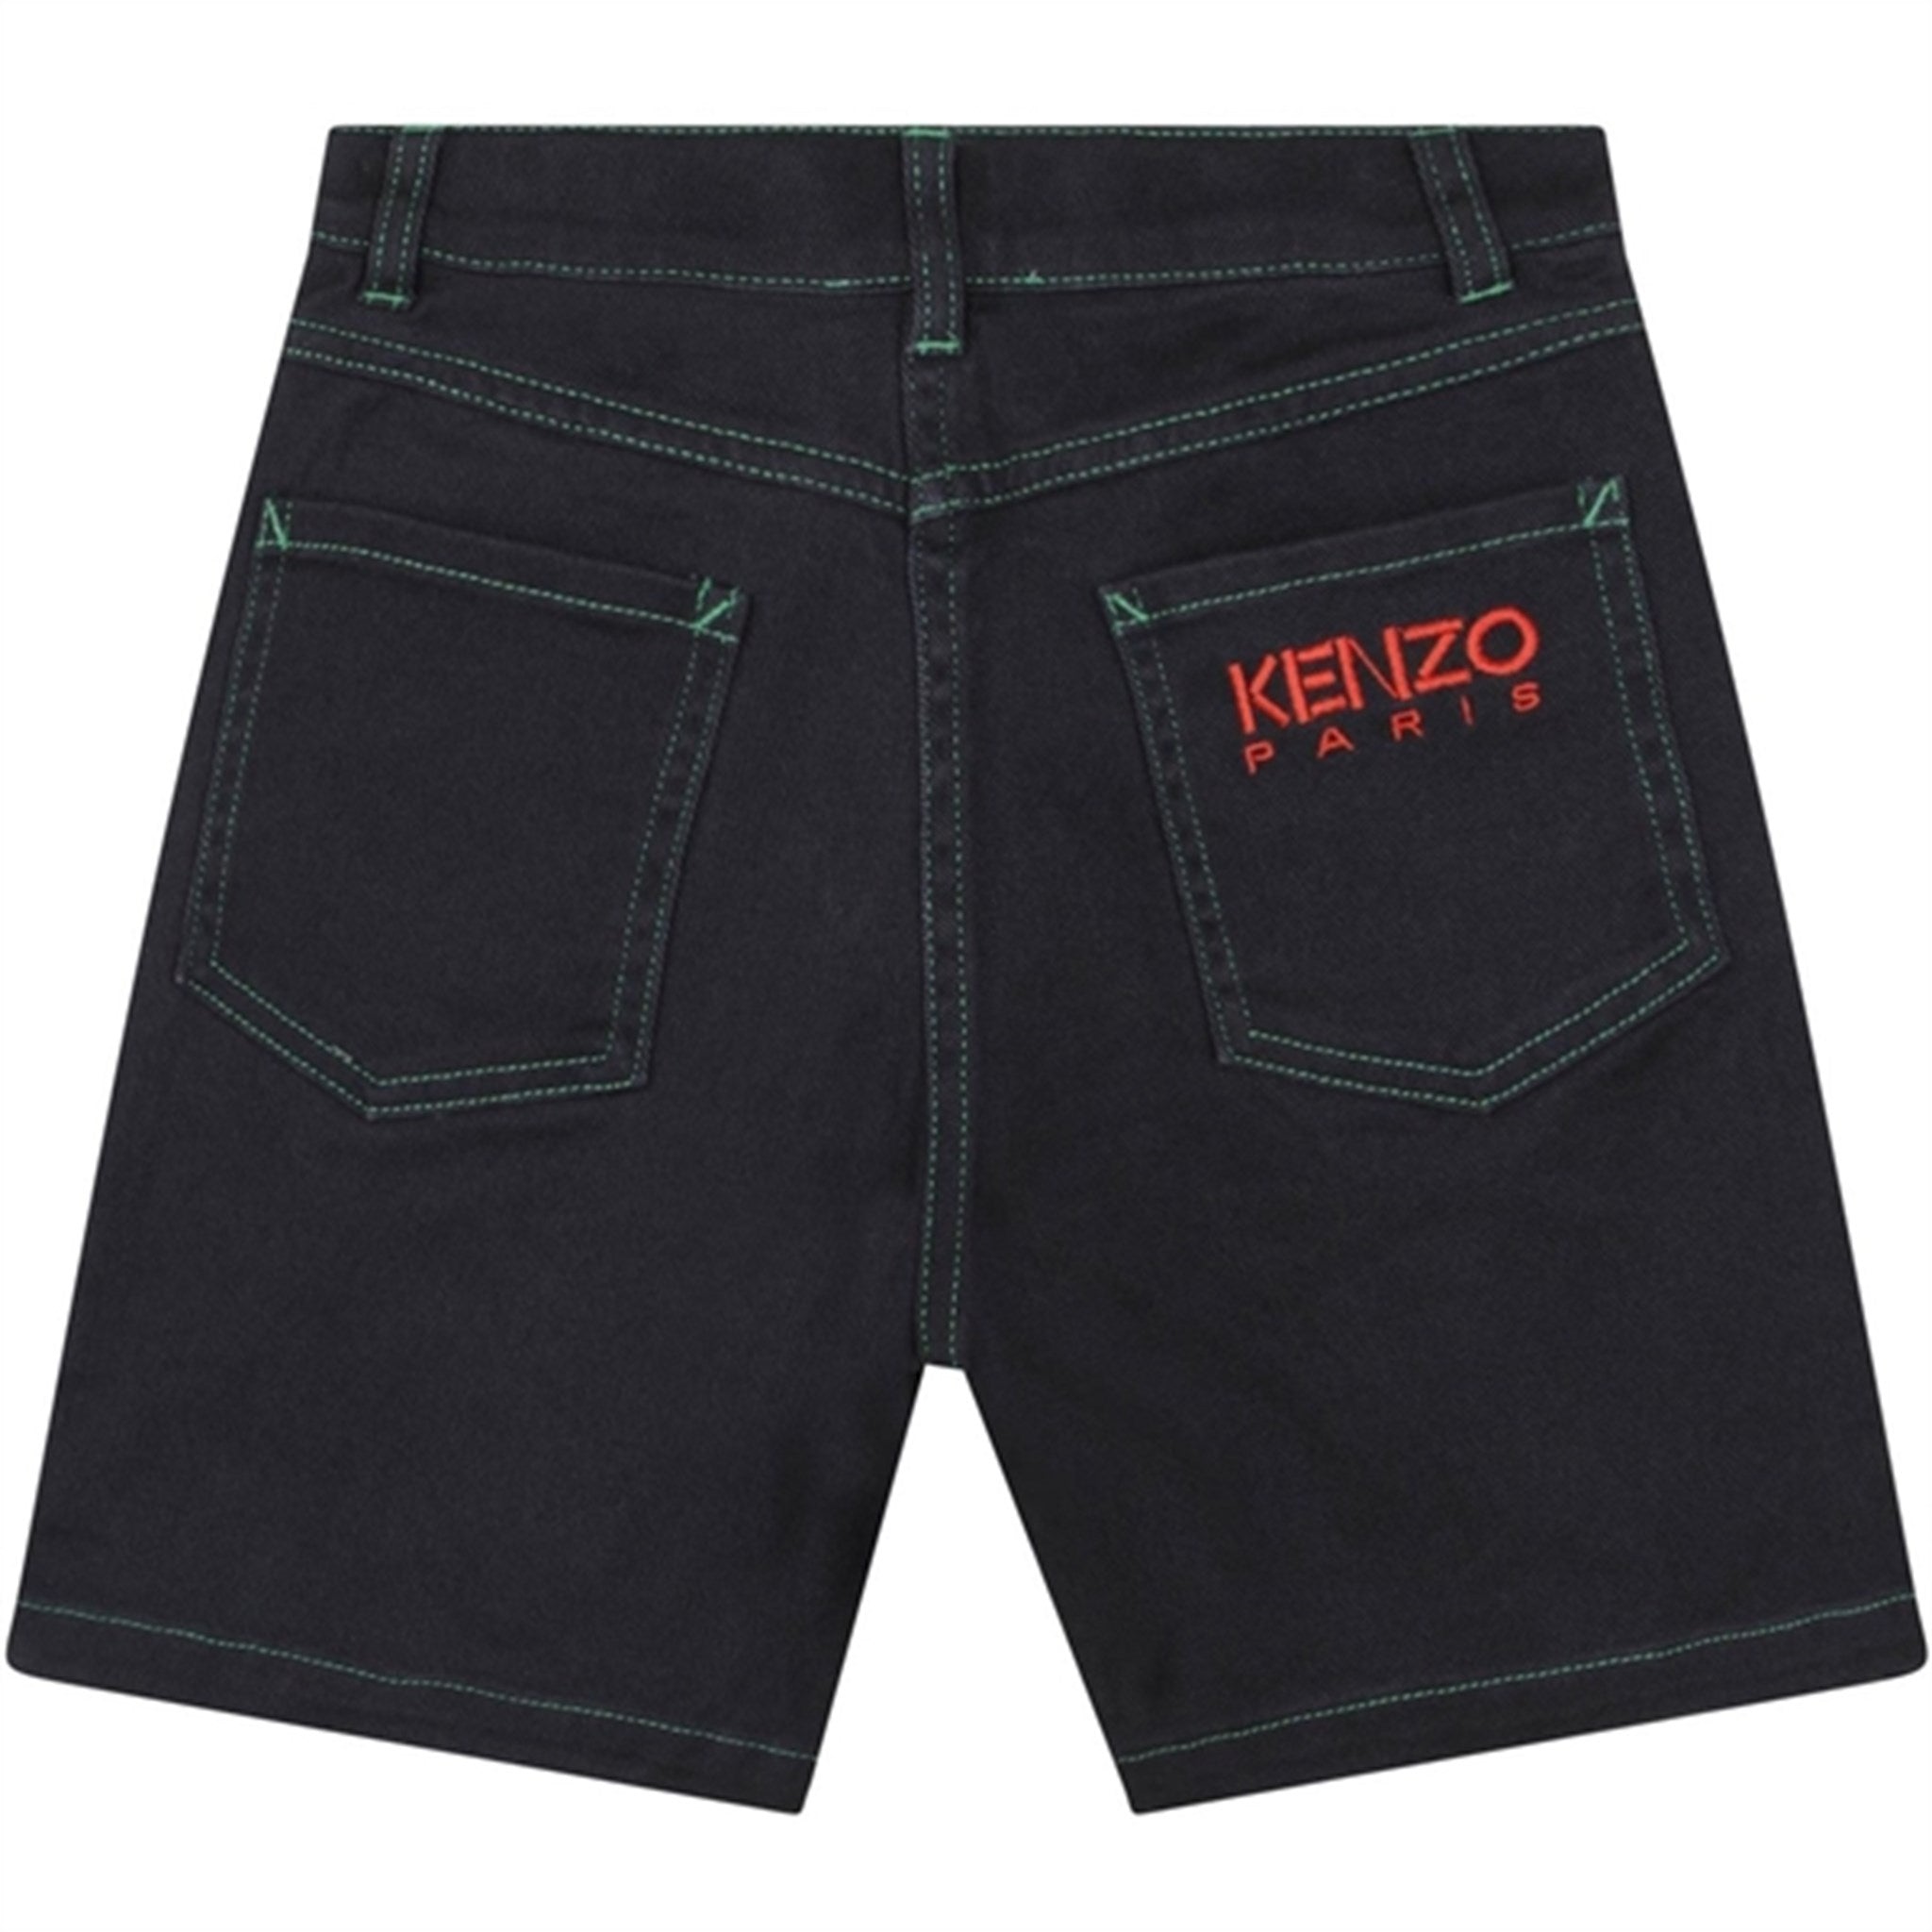 Kenzo Bermuda Shorts Black 2